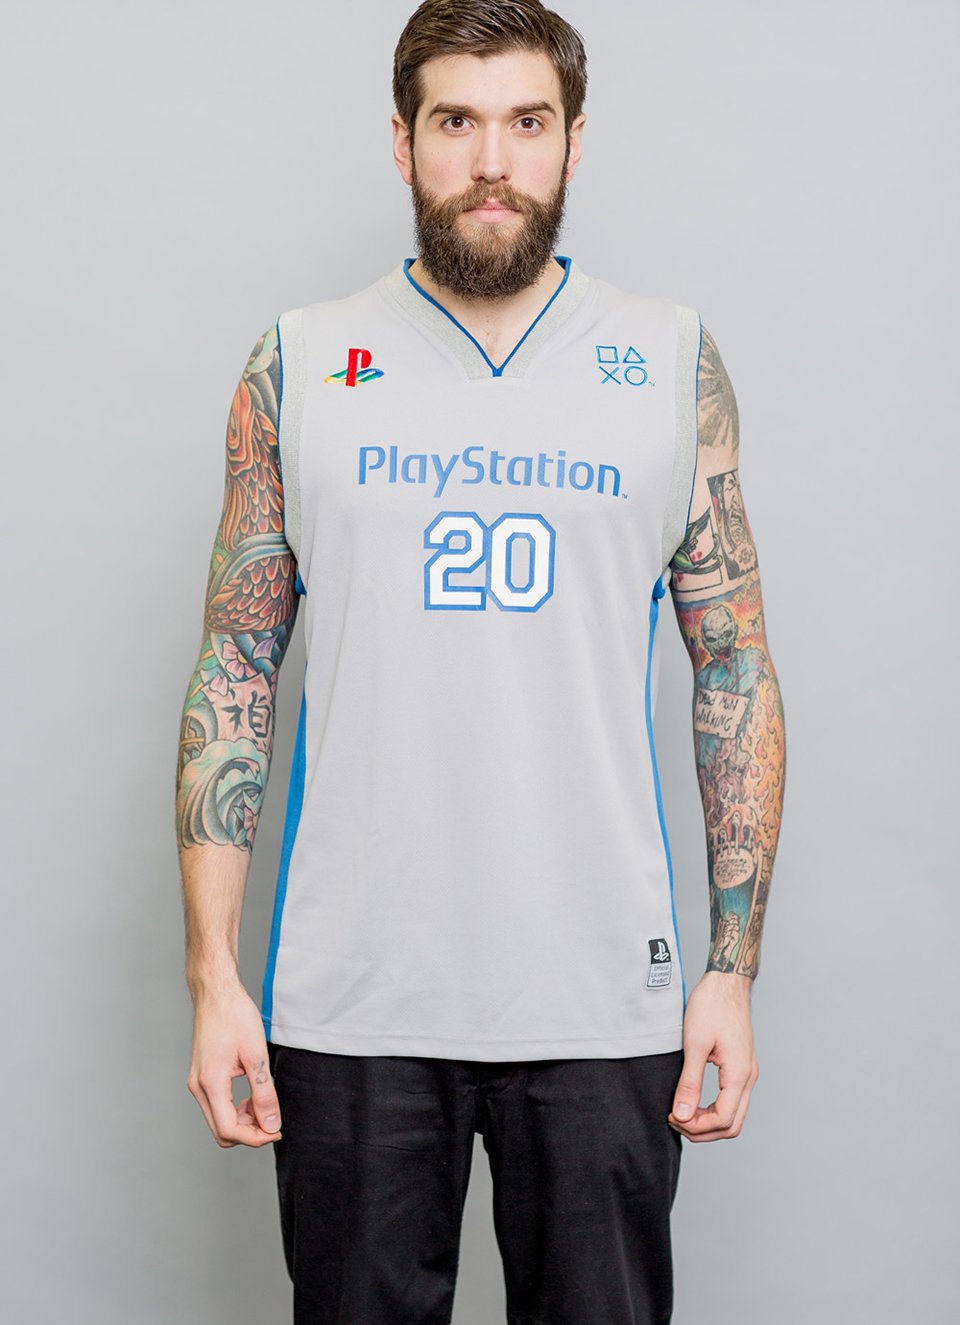 PlayStation 20th Anniversary Clothing